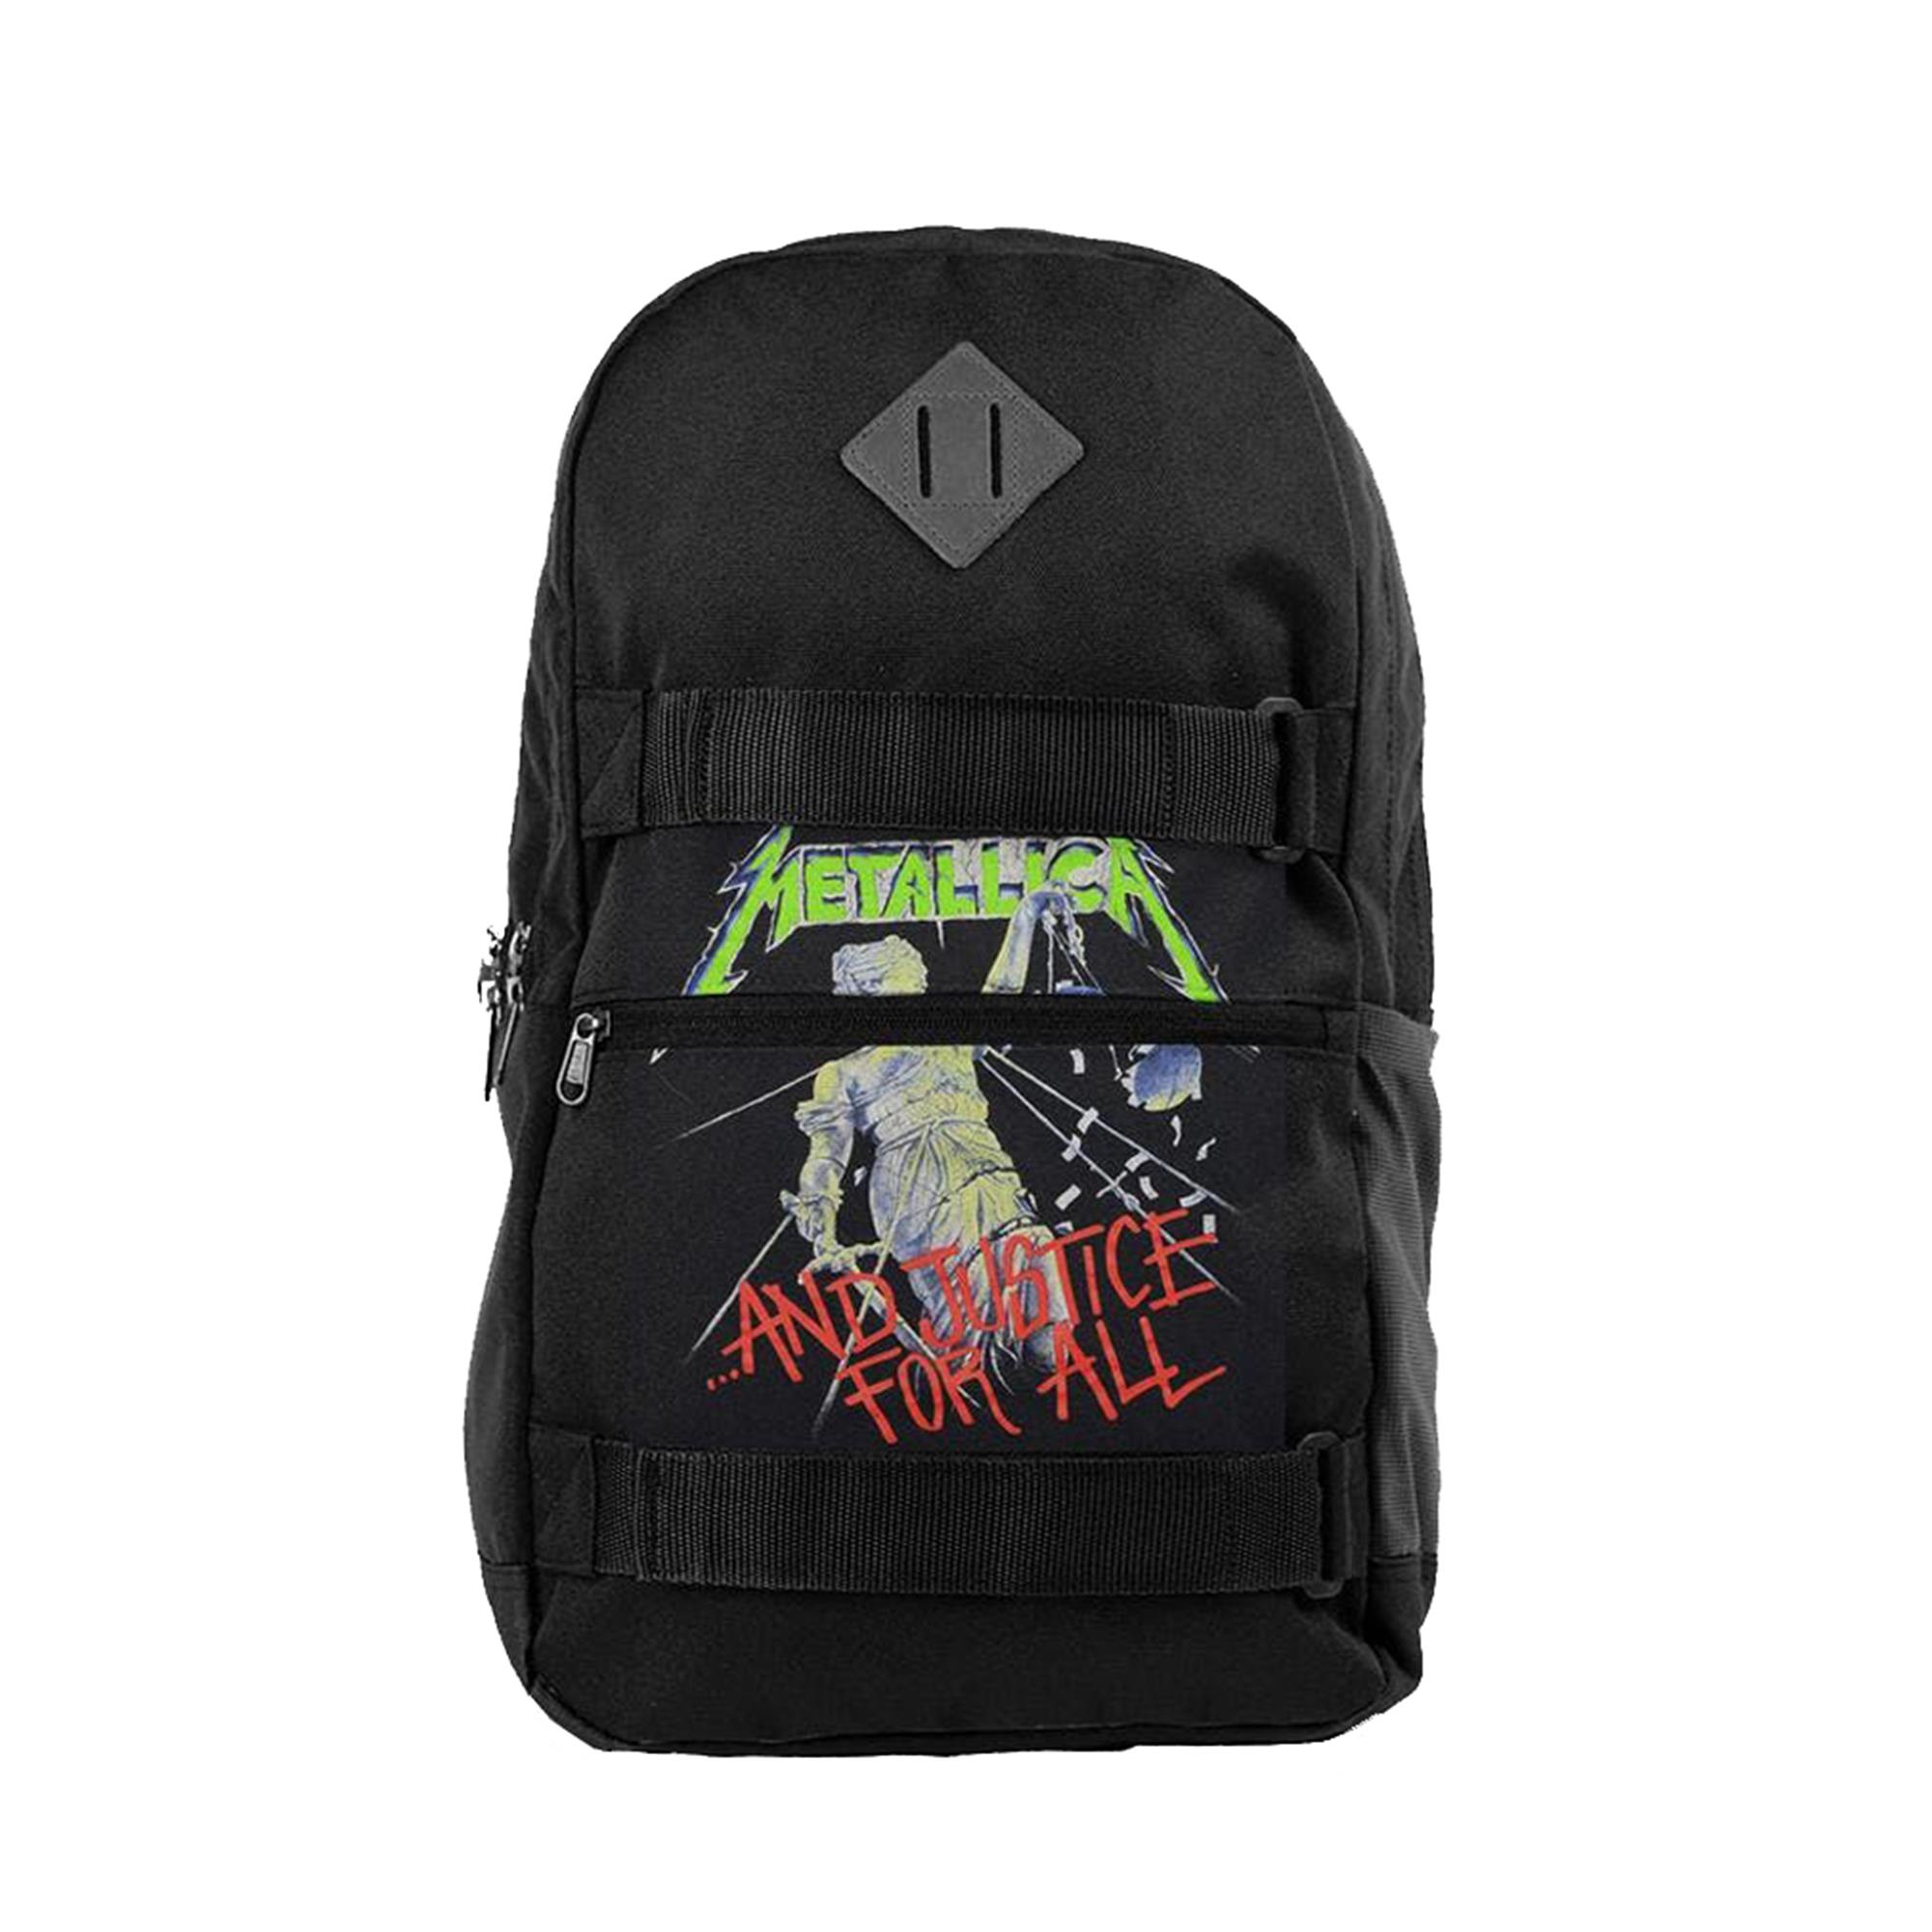 Metallica Justice For All Skate Bag